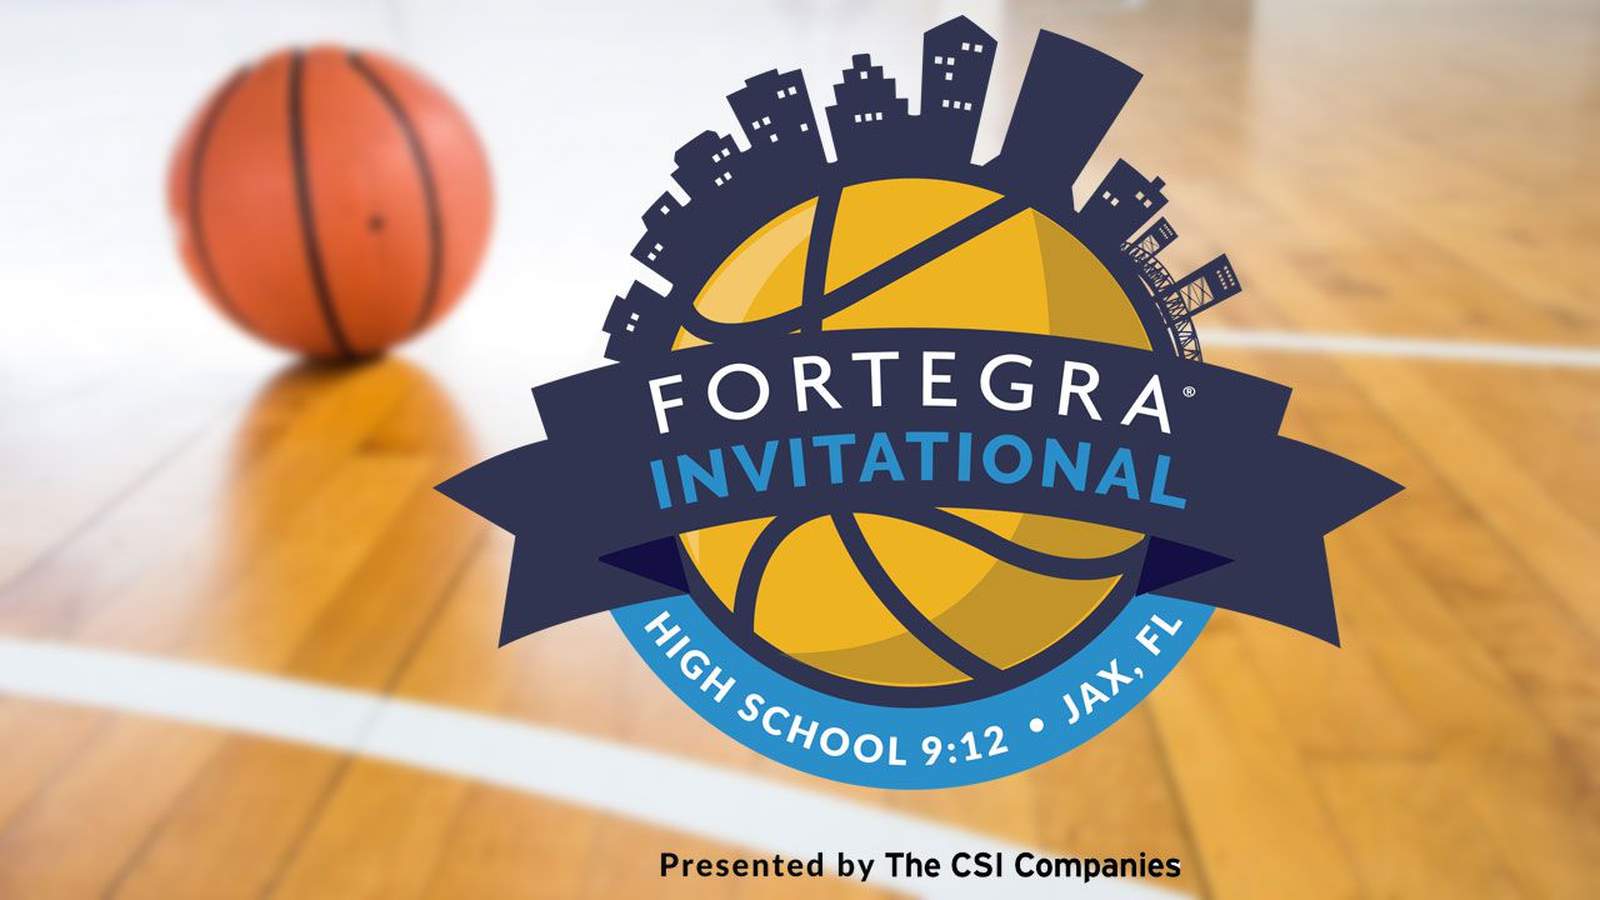 Fortegra High School 9:12 basketball invitational starts Thursday